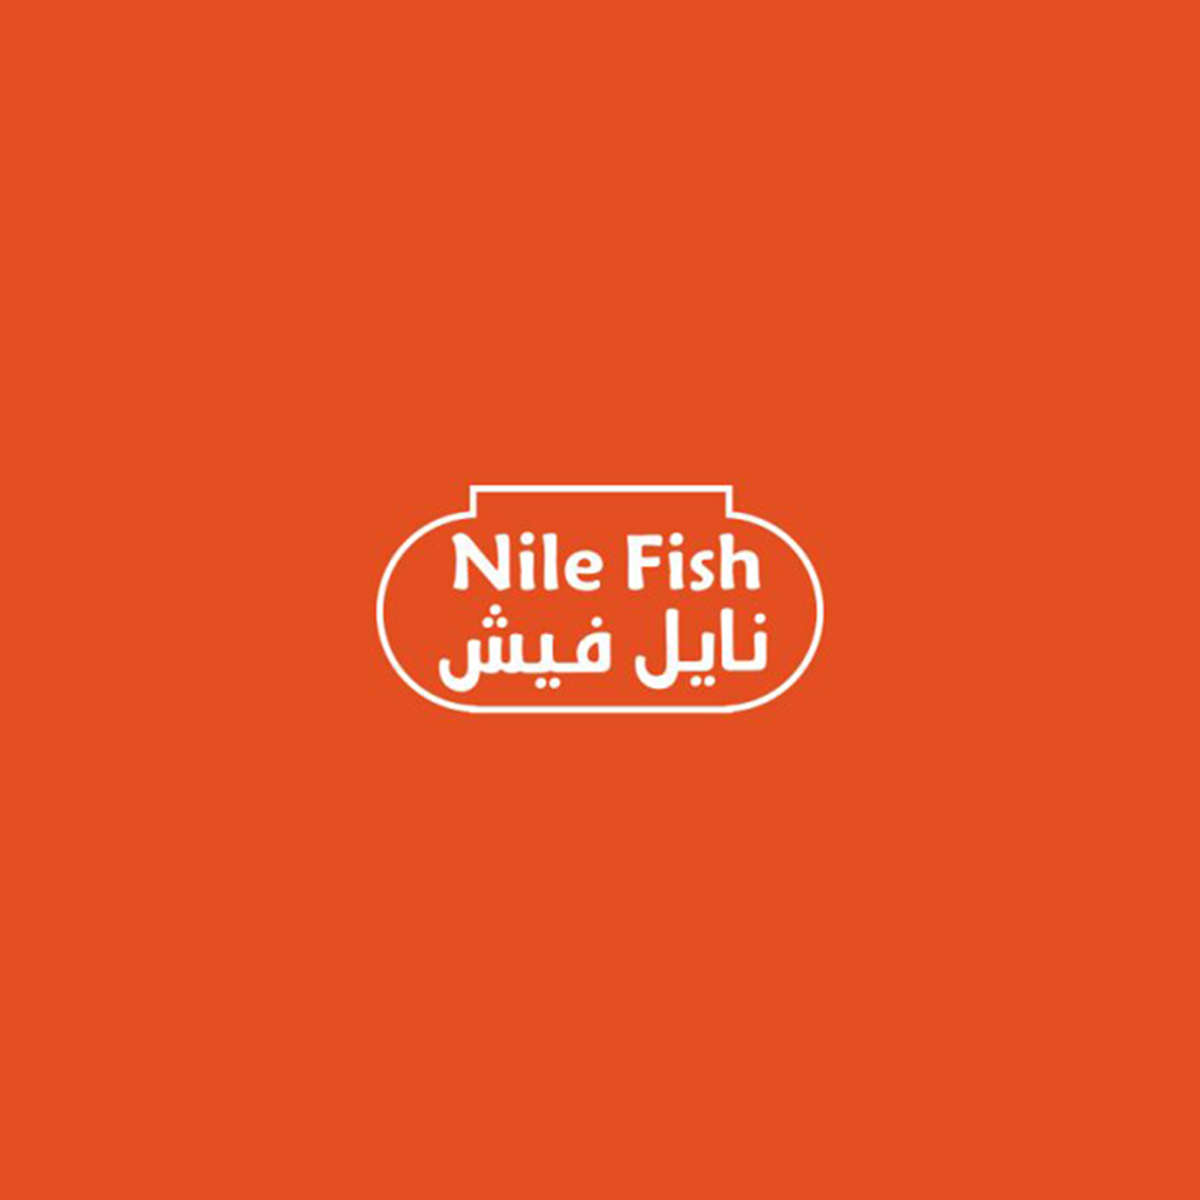 Nile-Fish